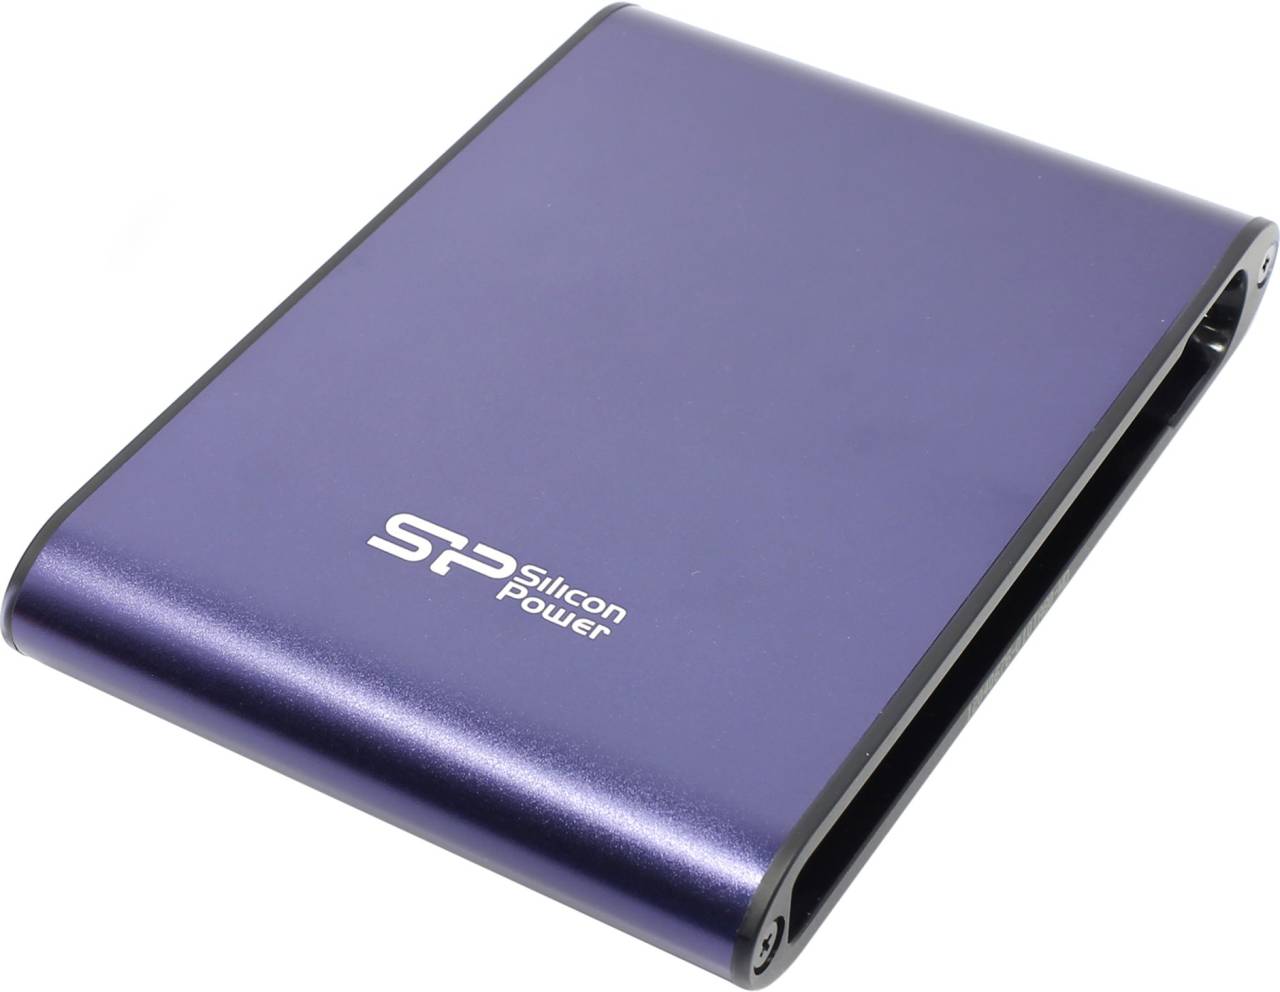    USB3.0 Silicon Power [SP010TBPHDA80S3B] Armor A80 Portable 2.5HDD 1Tb EXT (RTL)